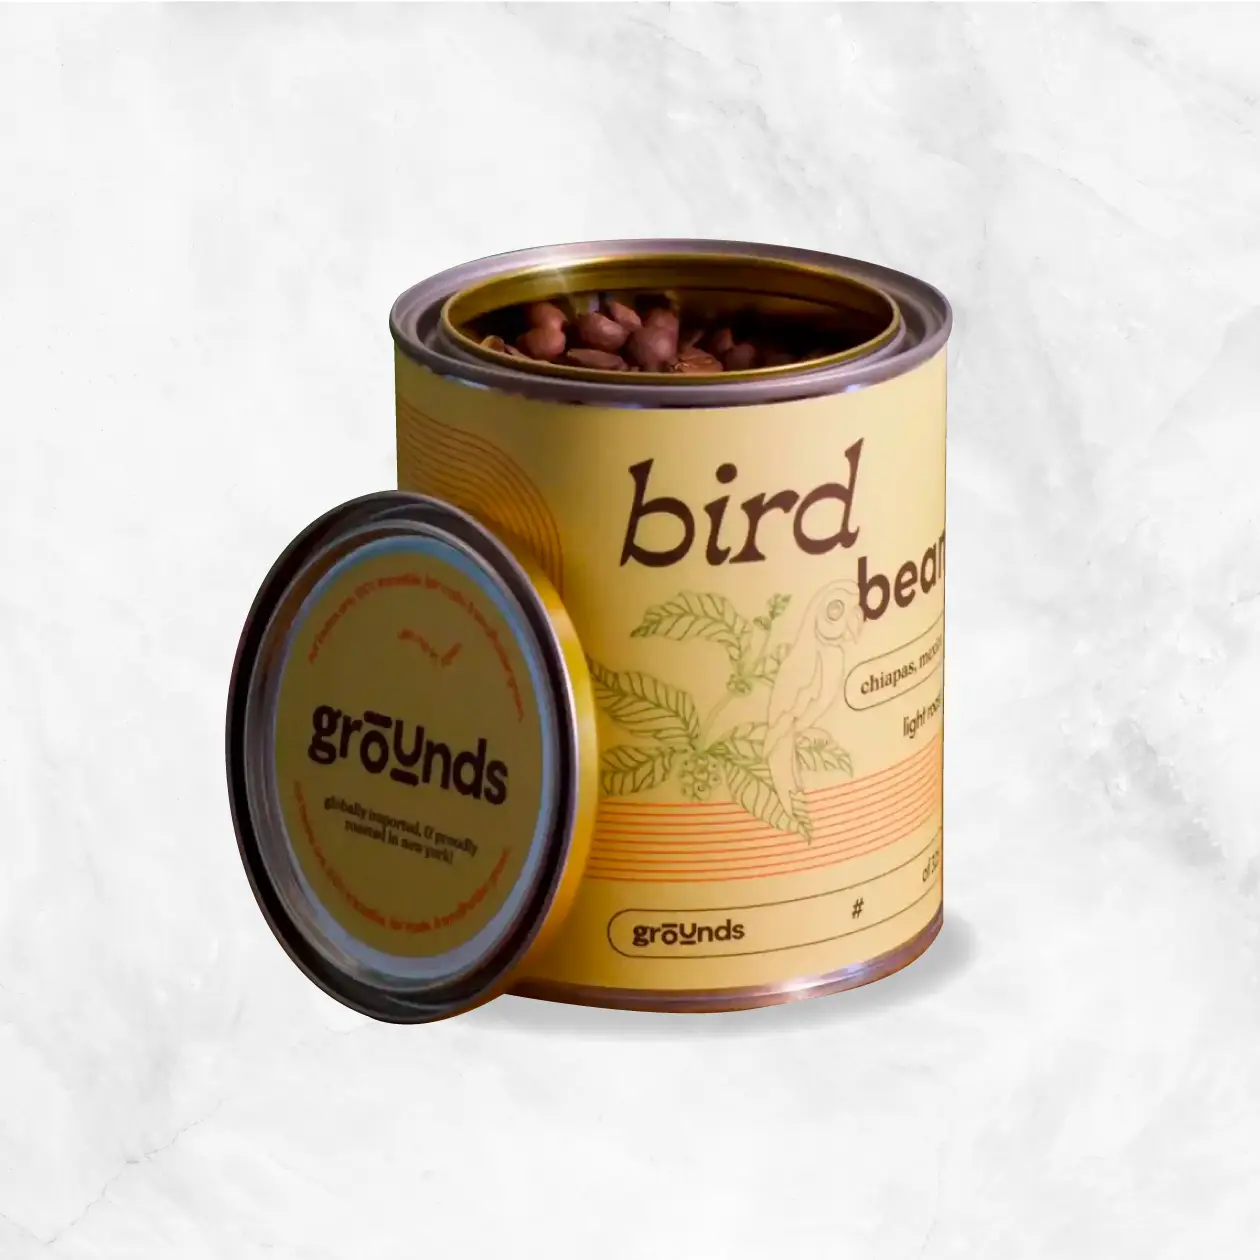  Bird Bean Delivery